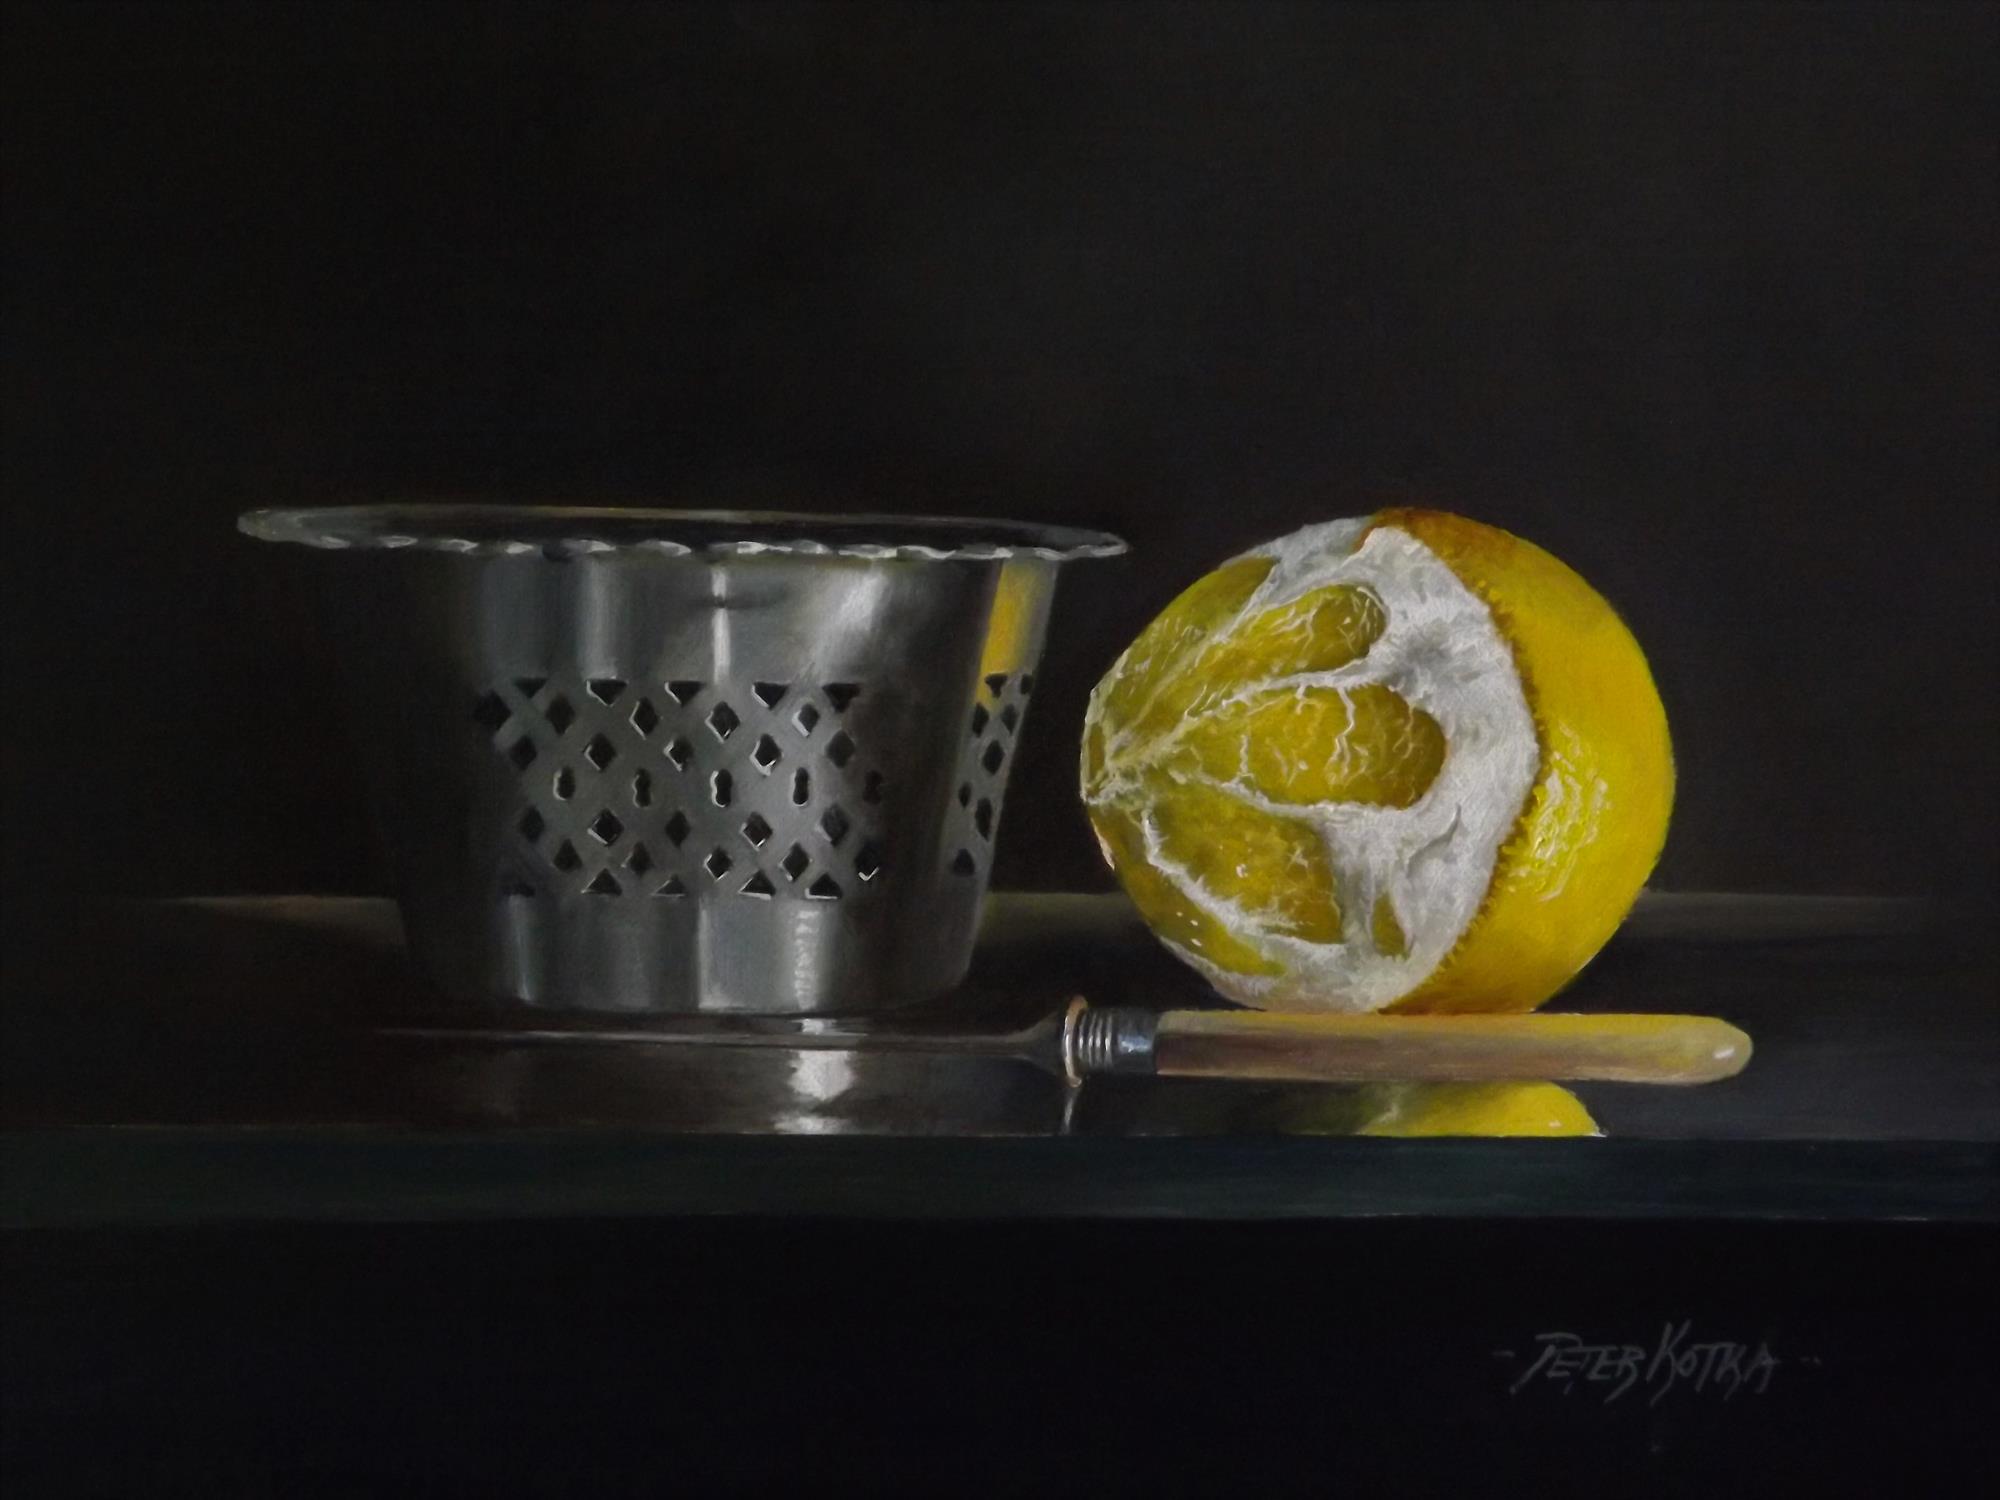 Peter Kotka | Pierced Silver Basket with Peeled Lemon